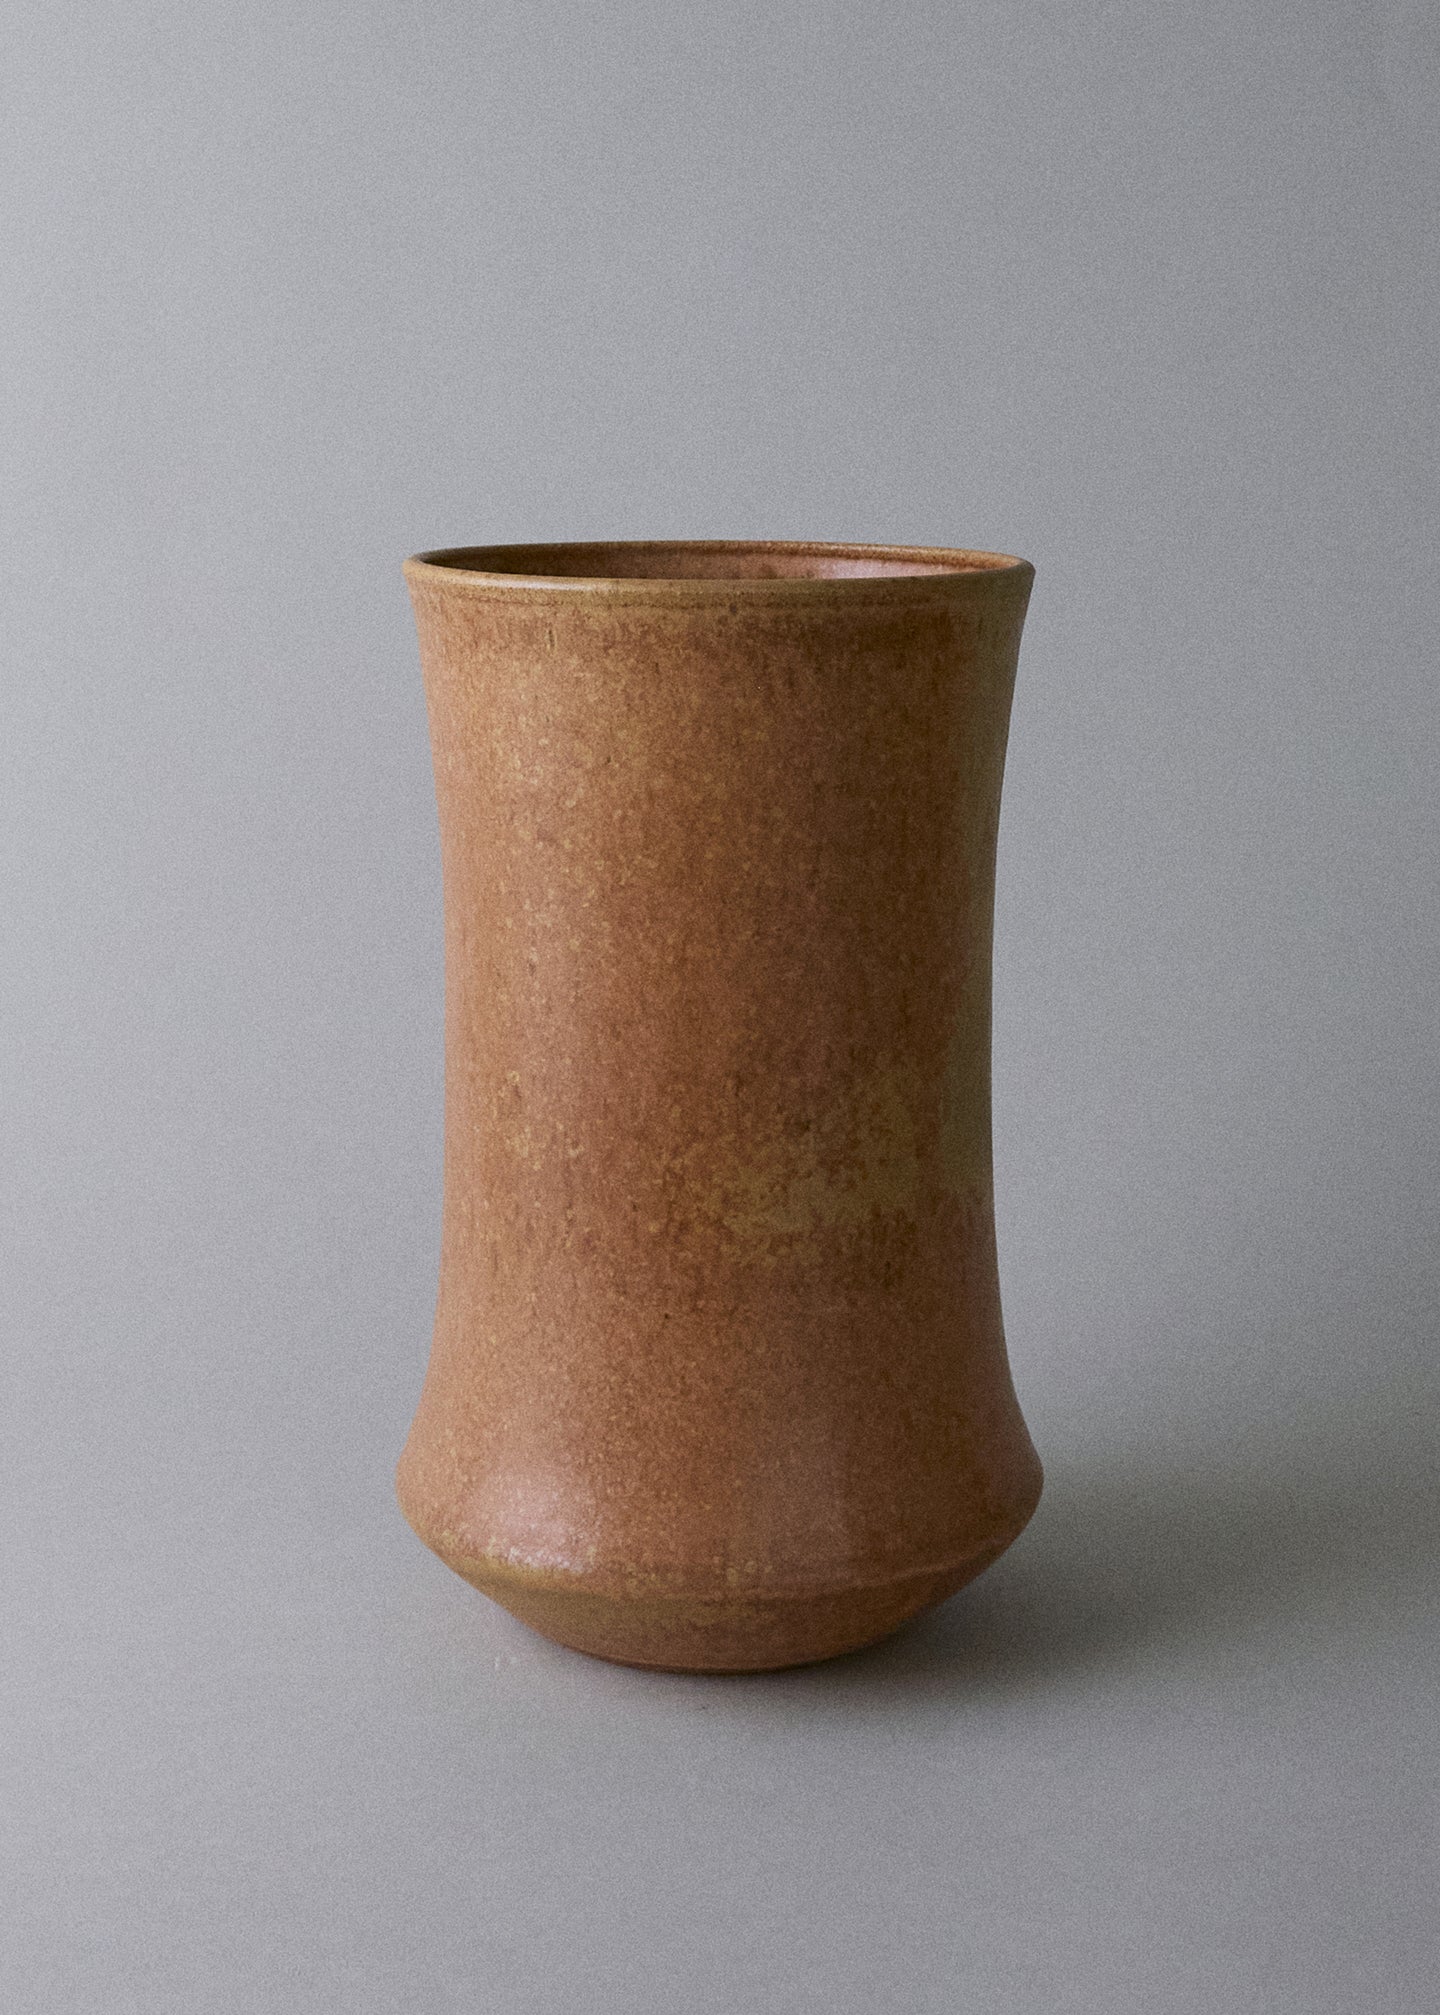 Artemis Vase in Jasper - Victoria Morris Pottery